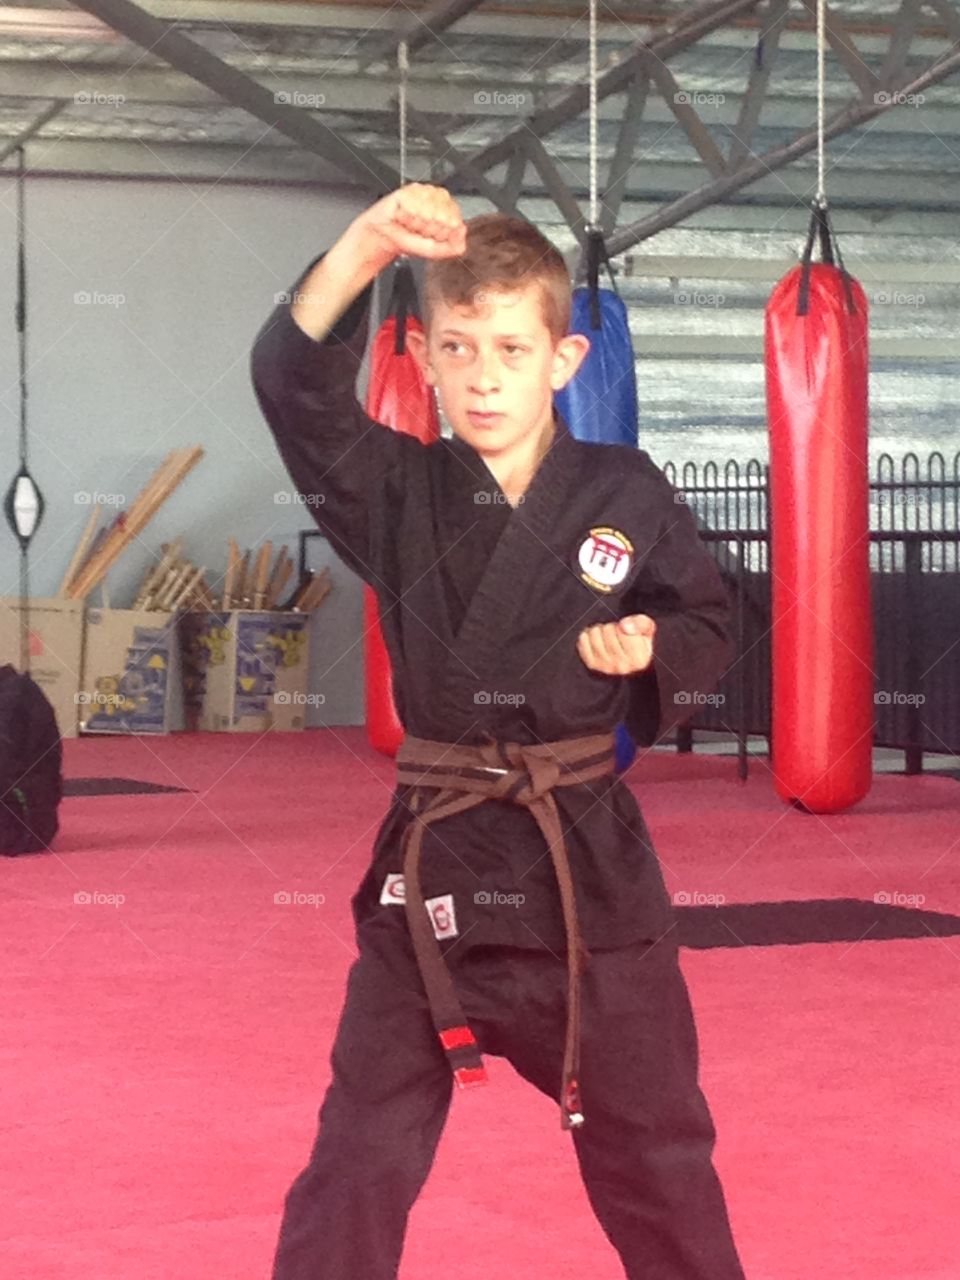 My karate kid